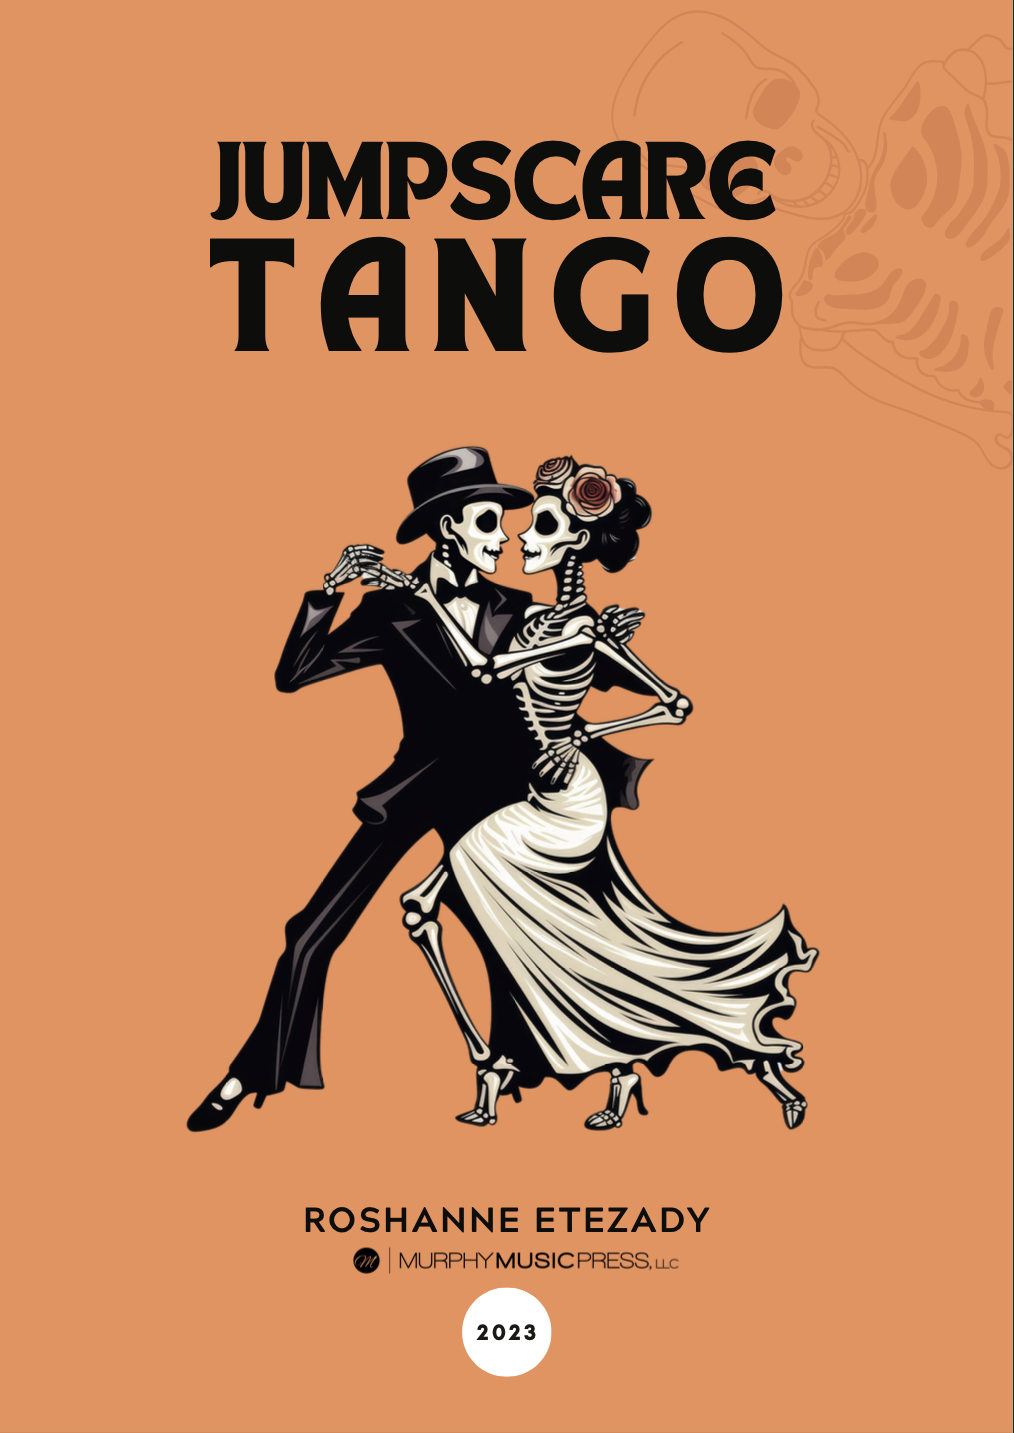 Jumpscare Tango by Roshanne Etezady